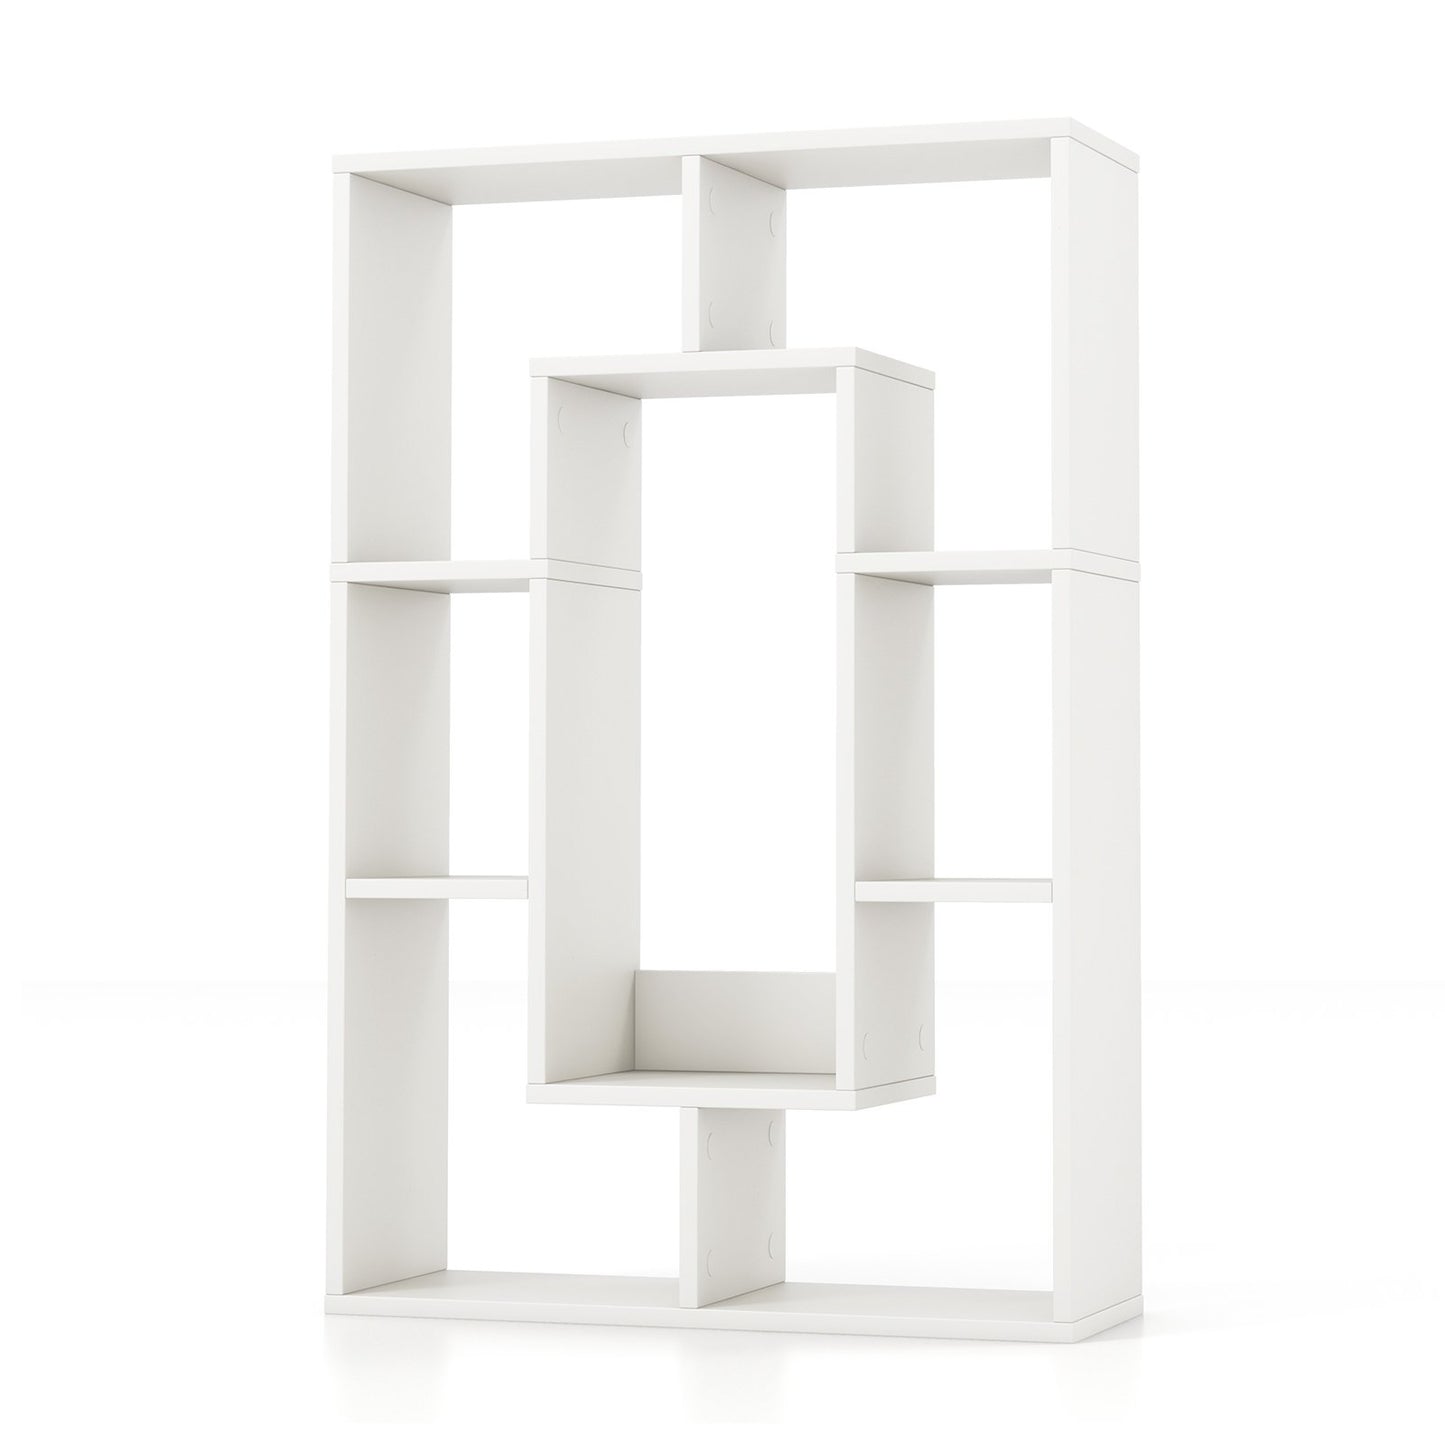 7-Cube Geometric Bookshelf Modern Decorative Open Bookcase, White